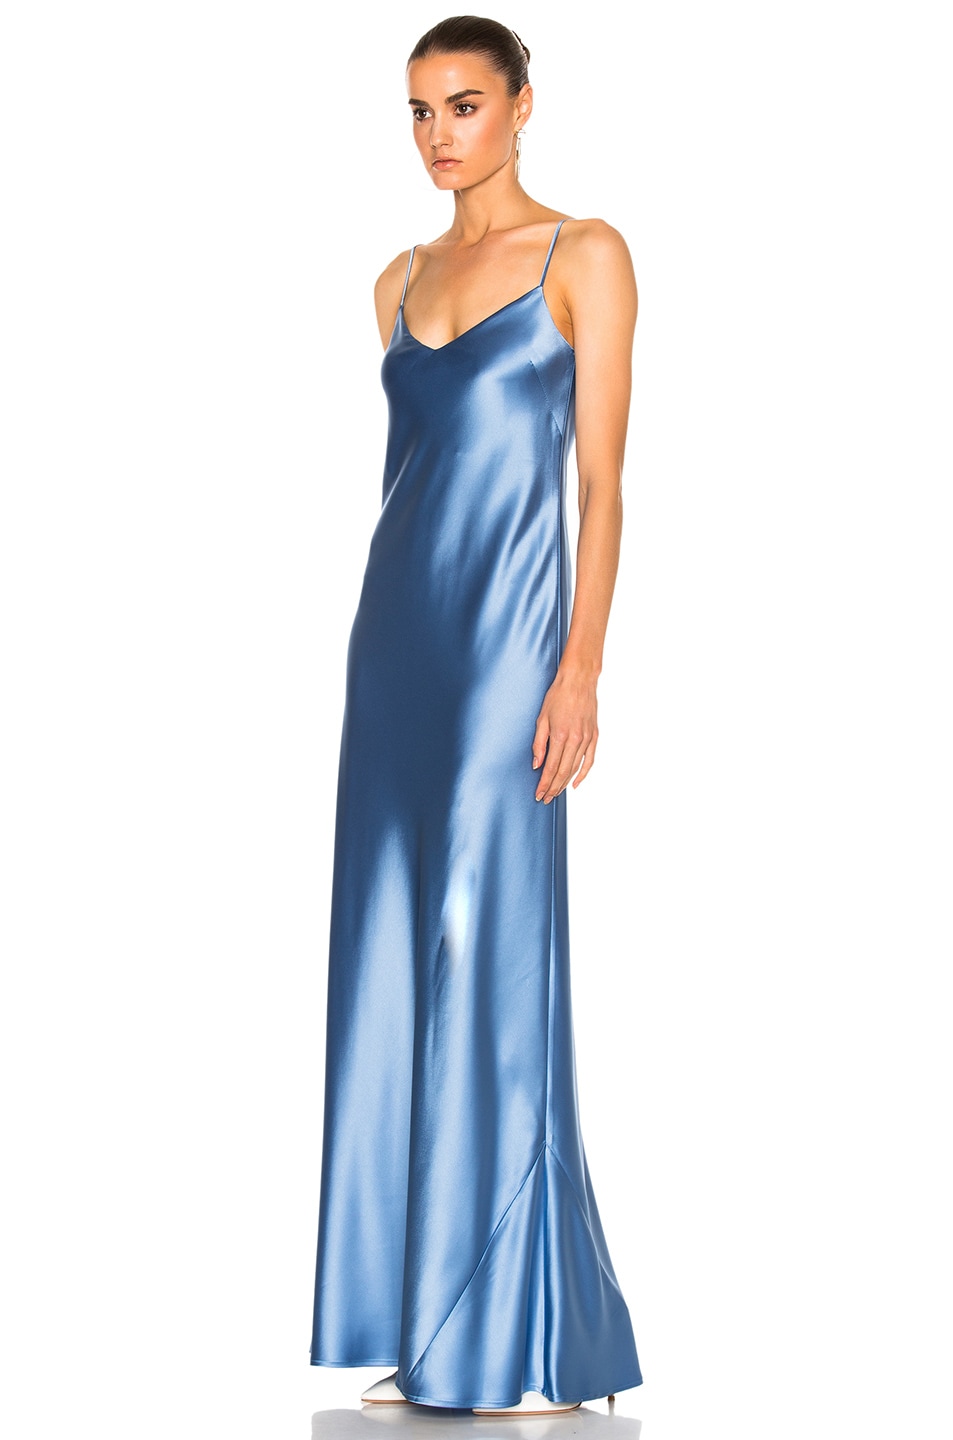 GALVAN for FWRD Alcazar V-Neck Dress in Sky Blue | FWRD